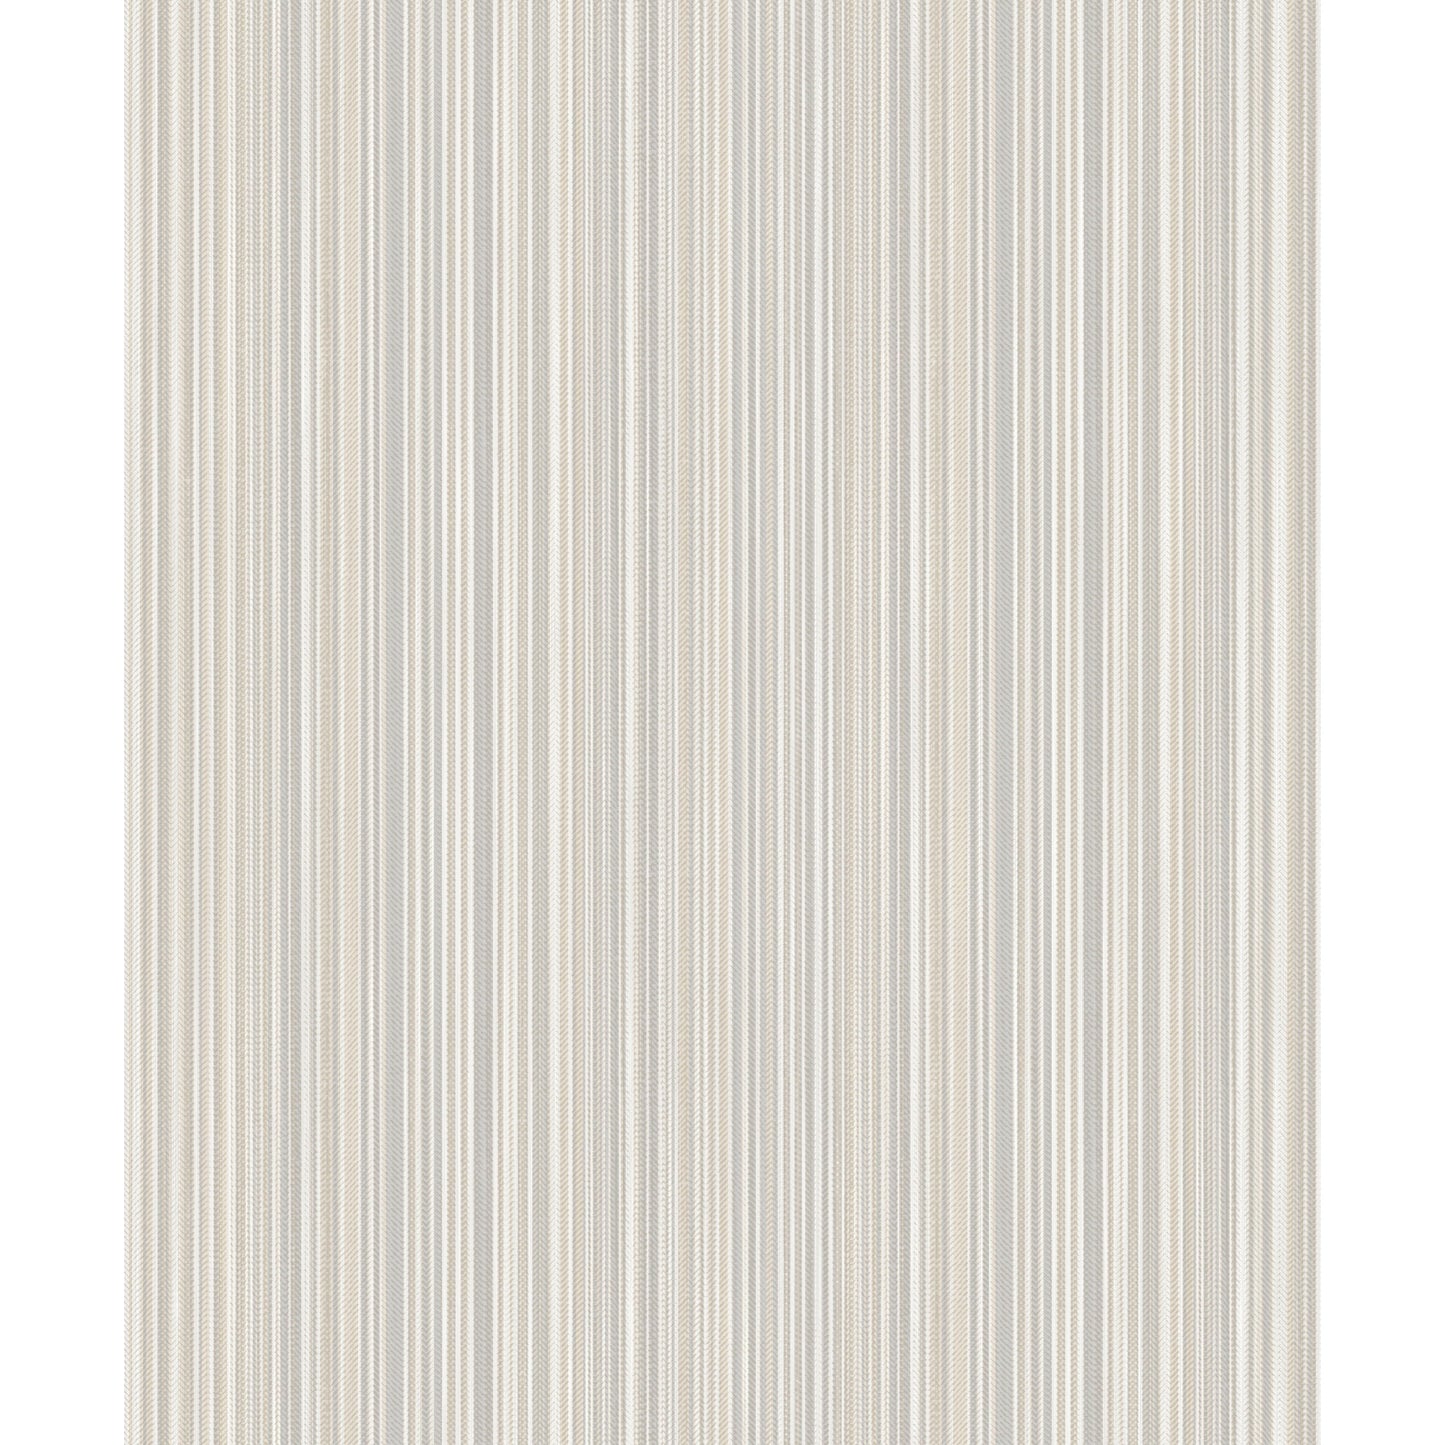 Muriva Venezia Stripe Beige Wallpaper (M66507)